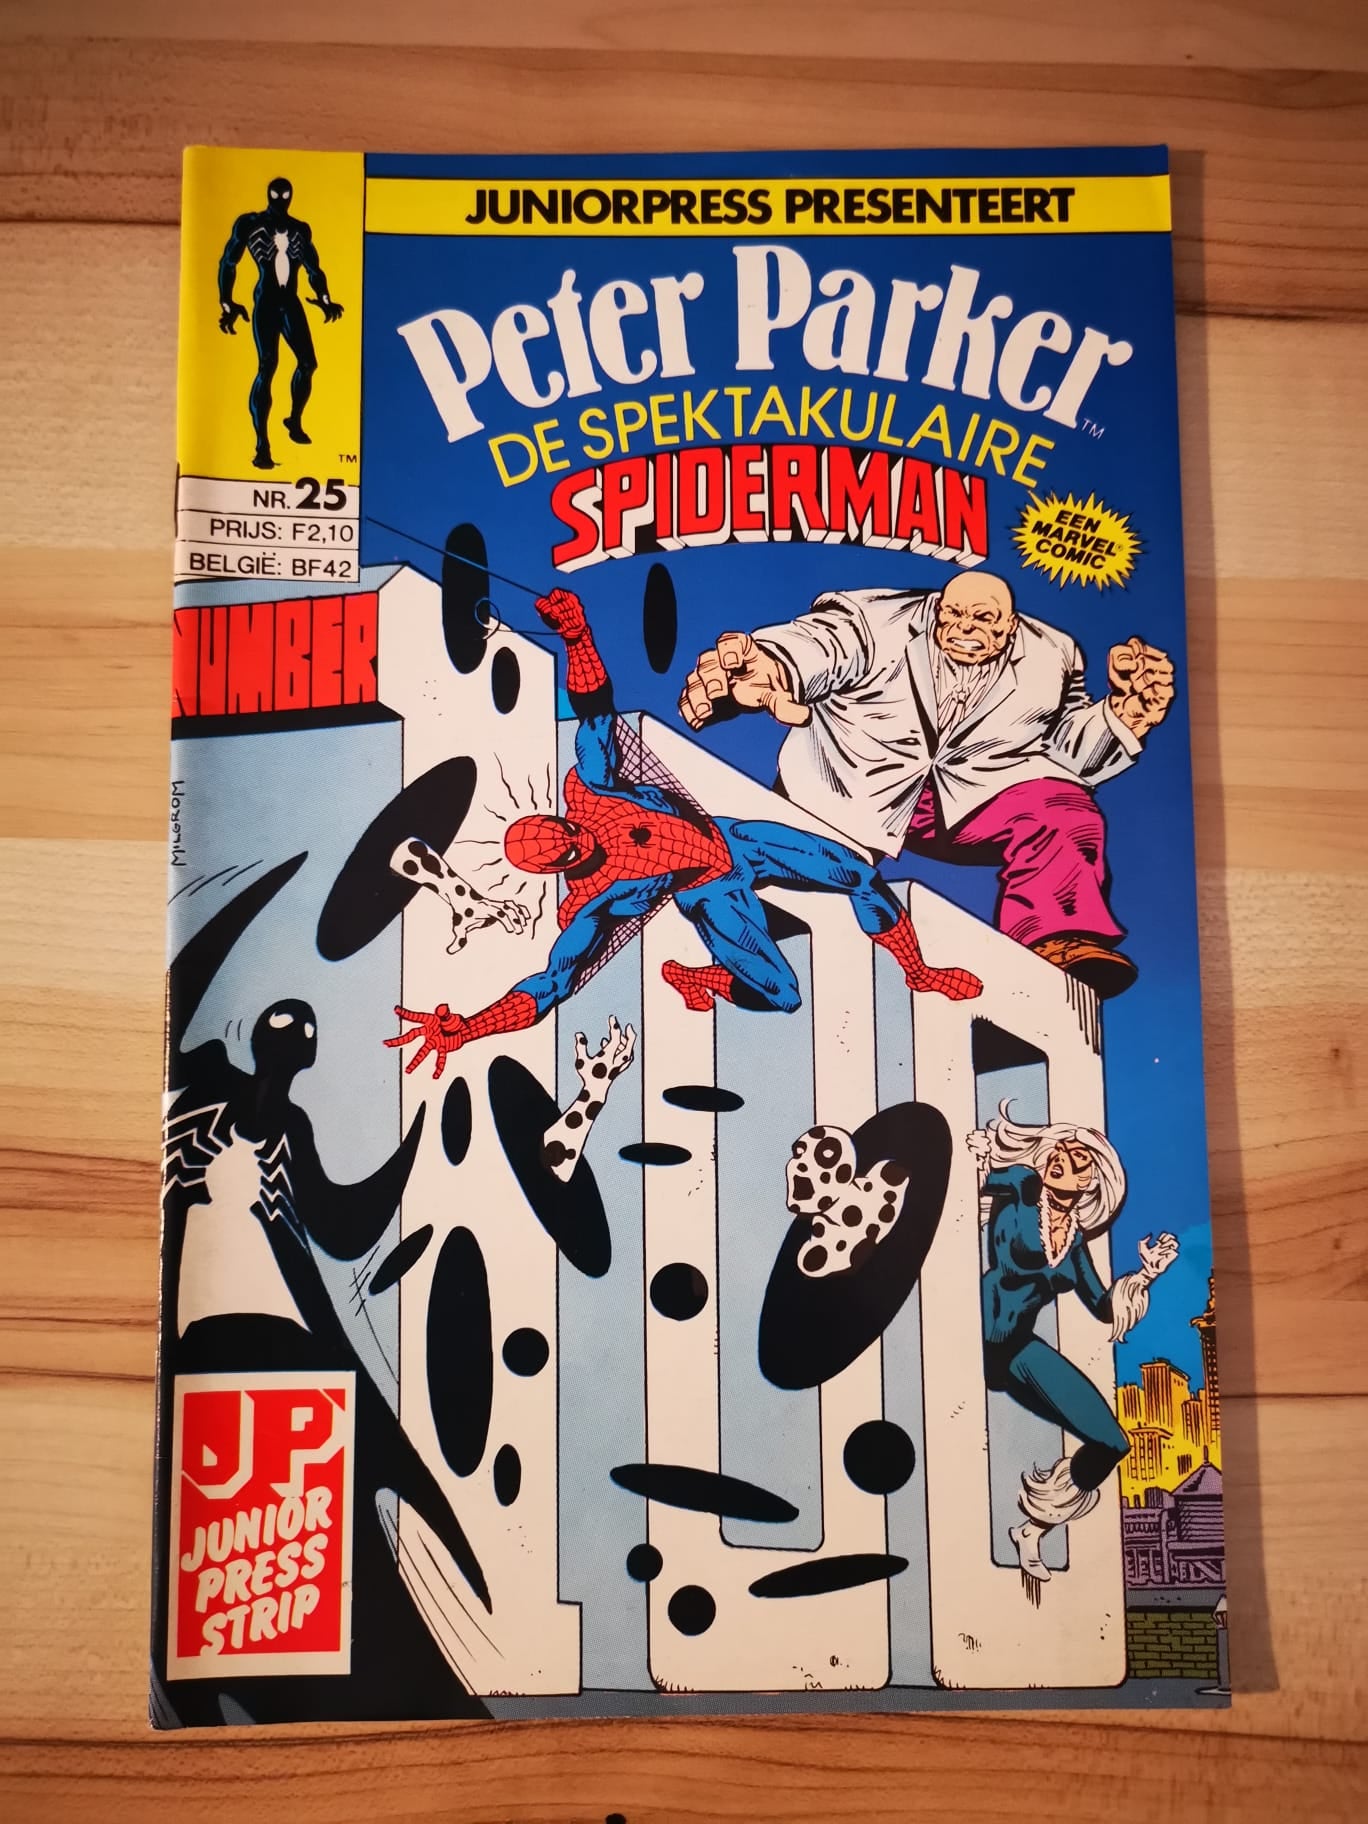 Peter Parker De spektakulaire spiderman #25